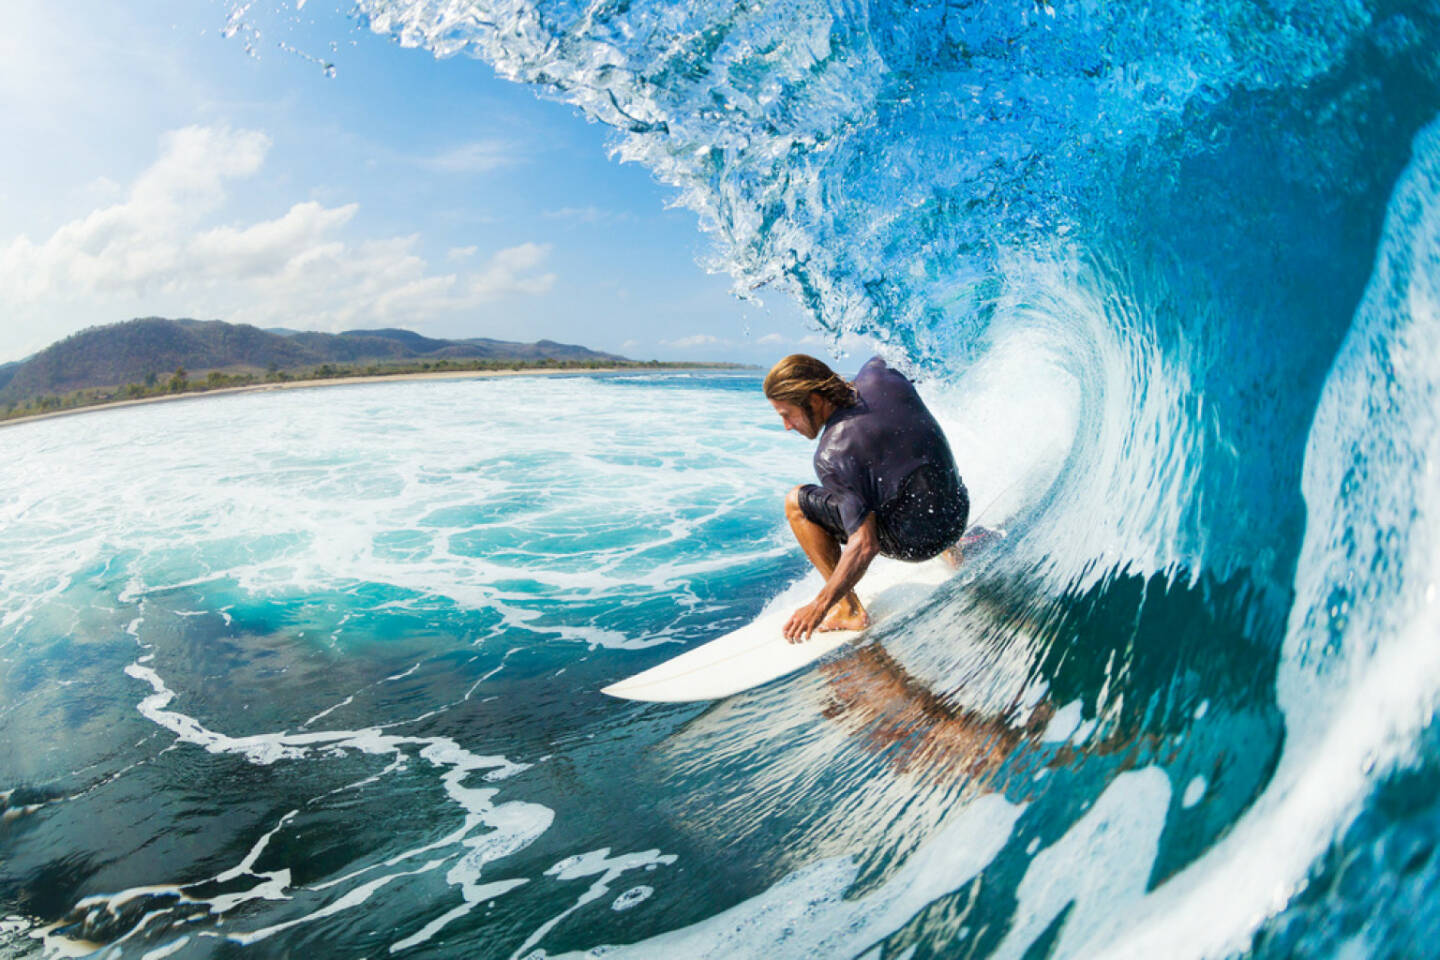 Welle, surfen, Erfolg, Erfolgswelle, auf der Erfolgswelle surfen, Wettkampf, Sport, Meer, Wasser, Glück, http://www.shutterstock.com/de/pic-117660574/stock-photo-surfer-on-blue-ocean-wave-in-the-tube-getting-barreled.html 